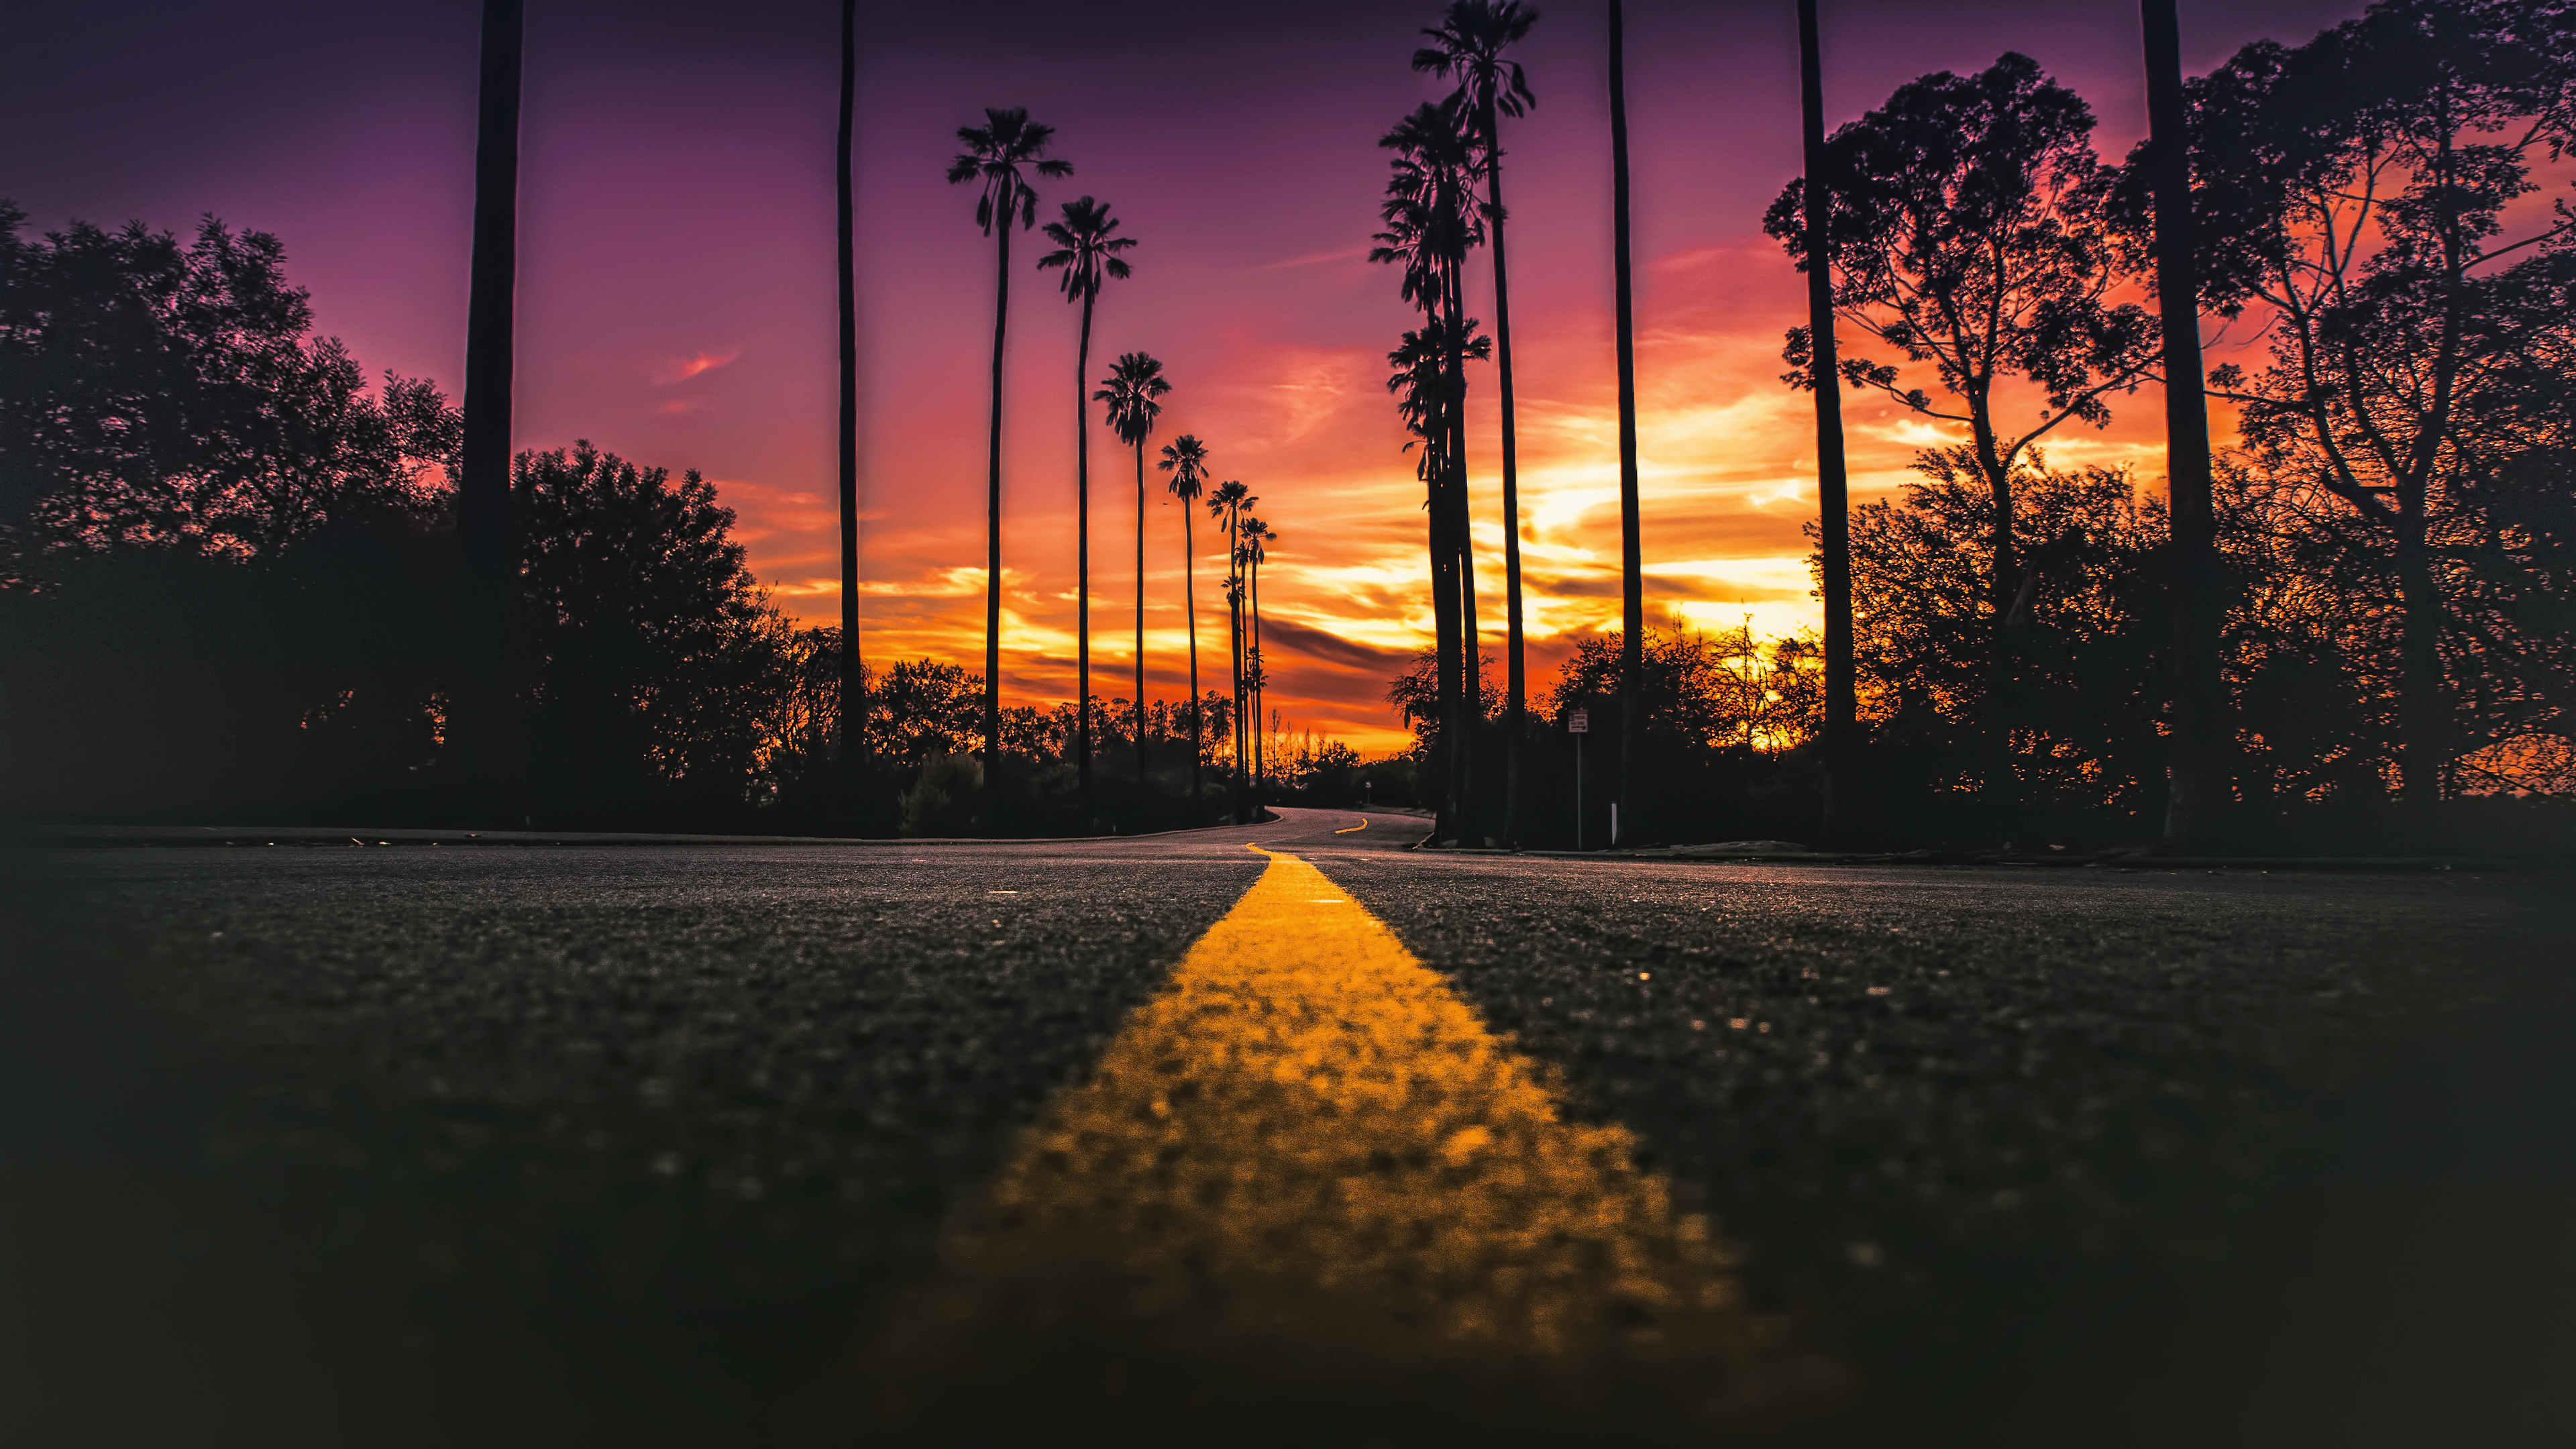 General 3840x2160 California sunlight sunset worm's eye view sunset glow sky USA street road trees